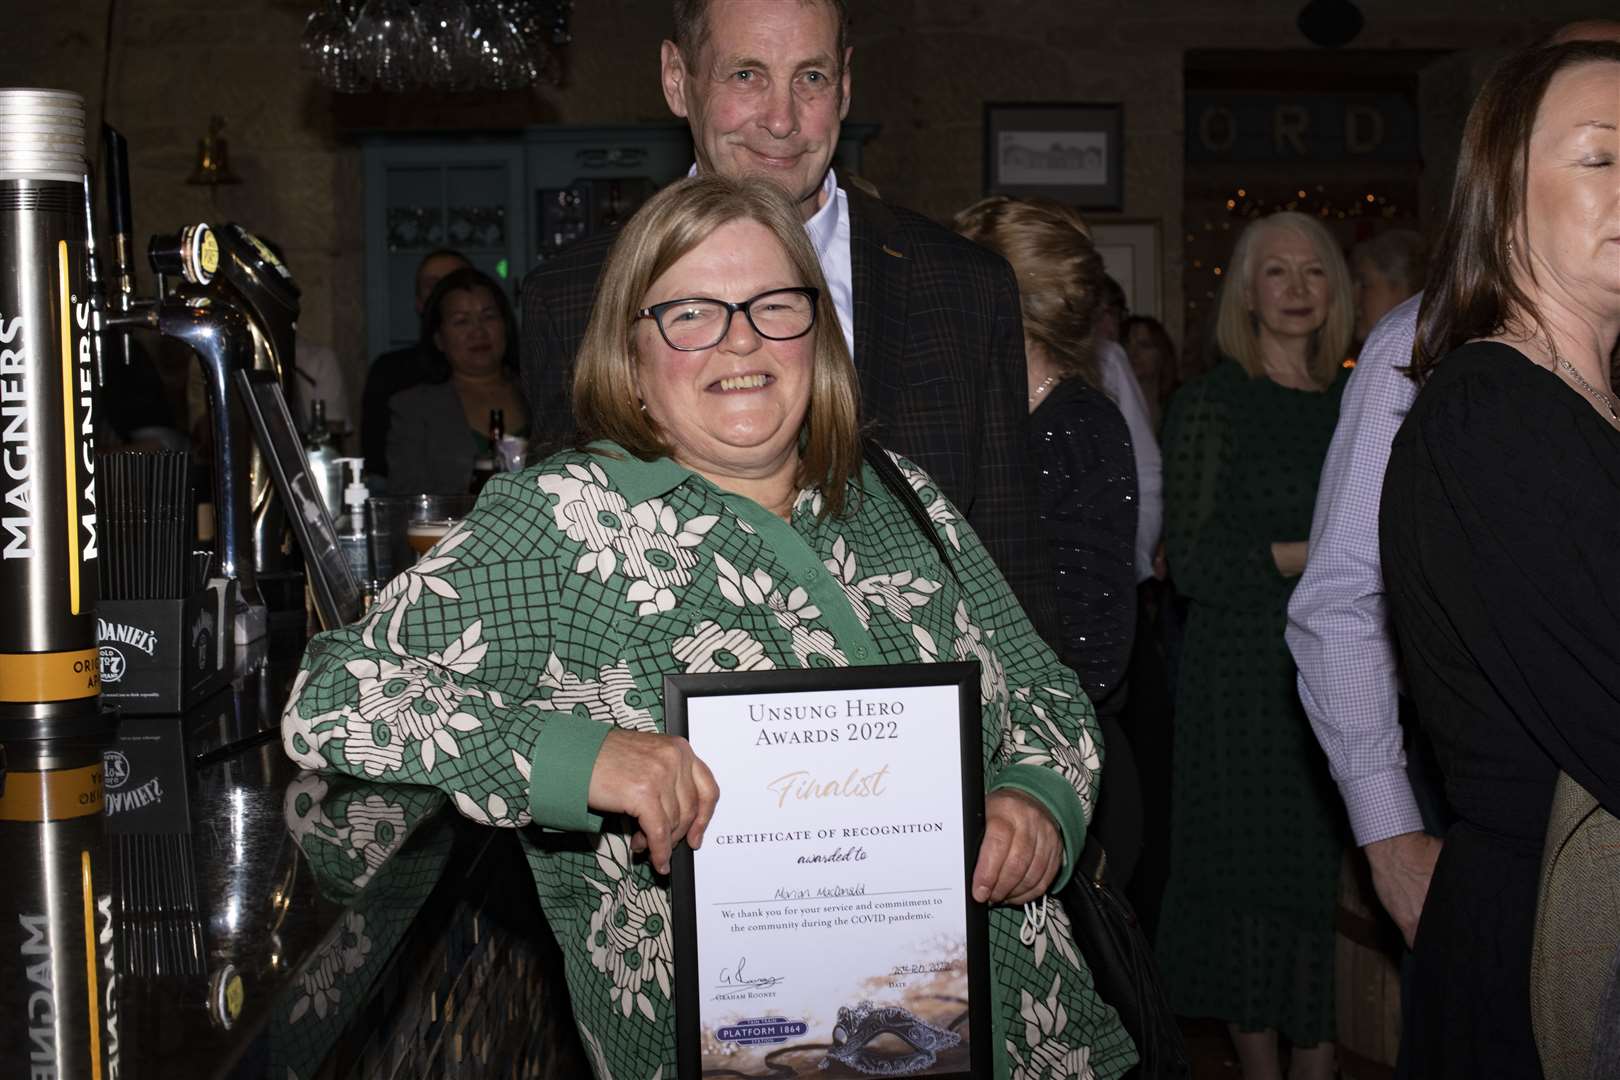 Finalist Marion MacDonald pictured with her certificate. Photo: Gillian Frampton